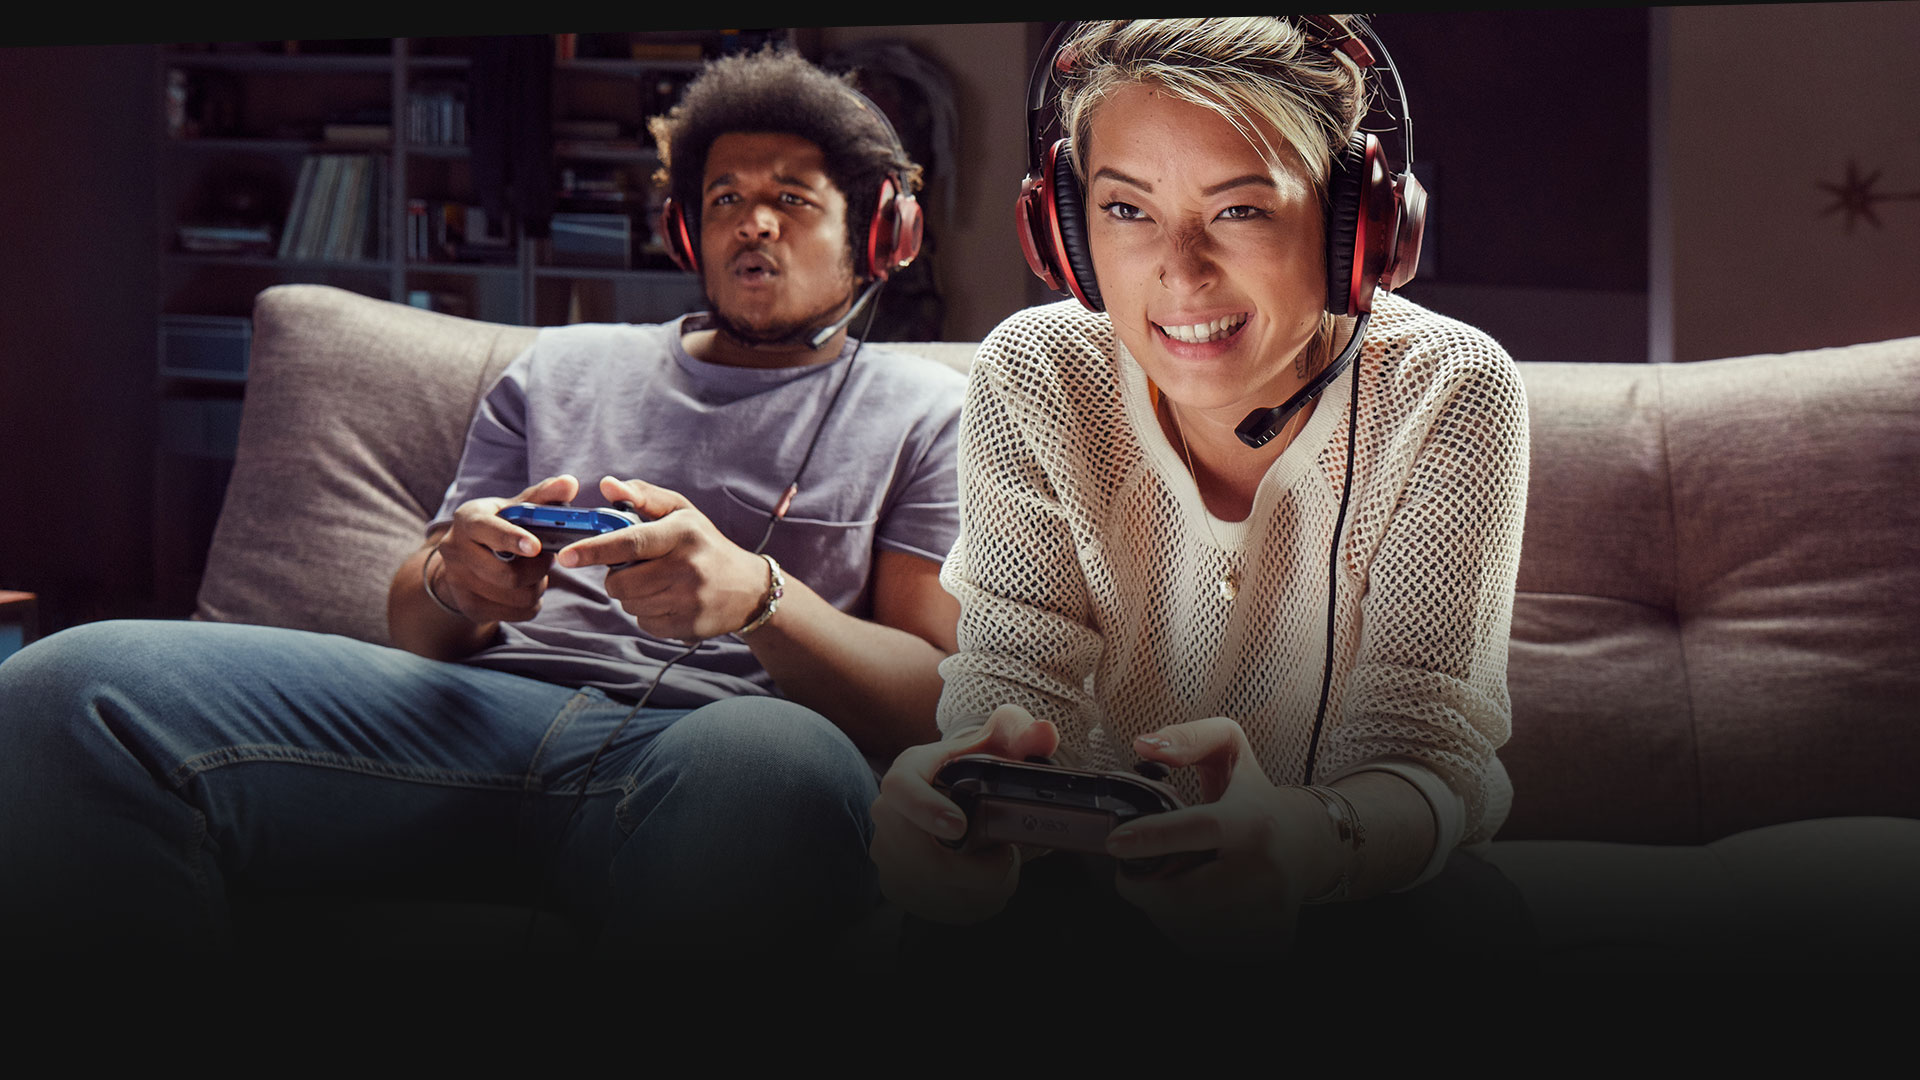 Два человека в наушниках играют в Xbox One на диване